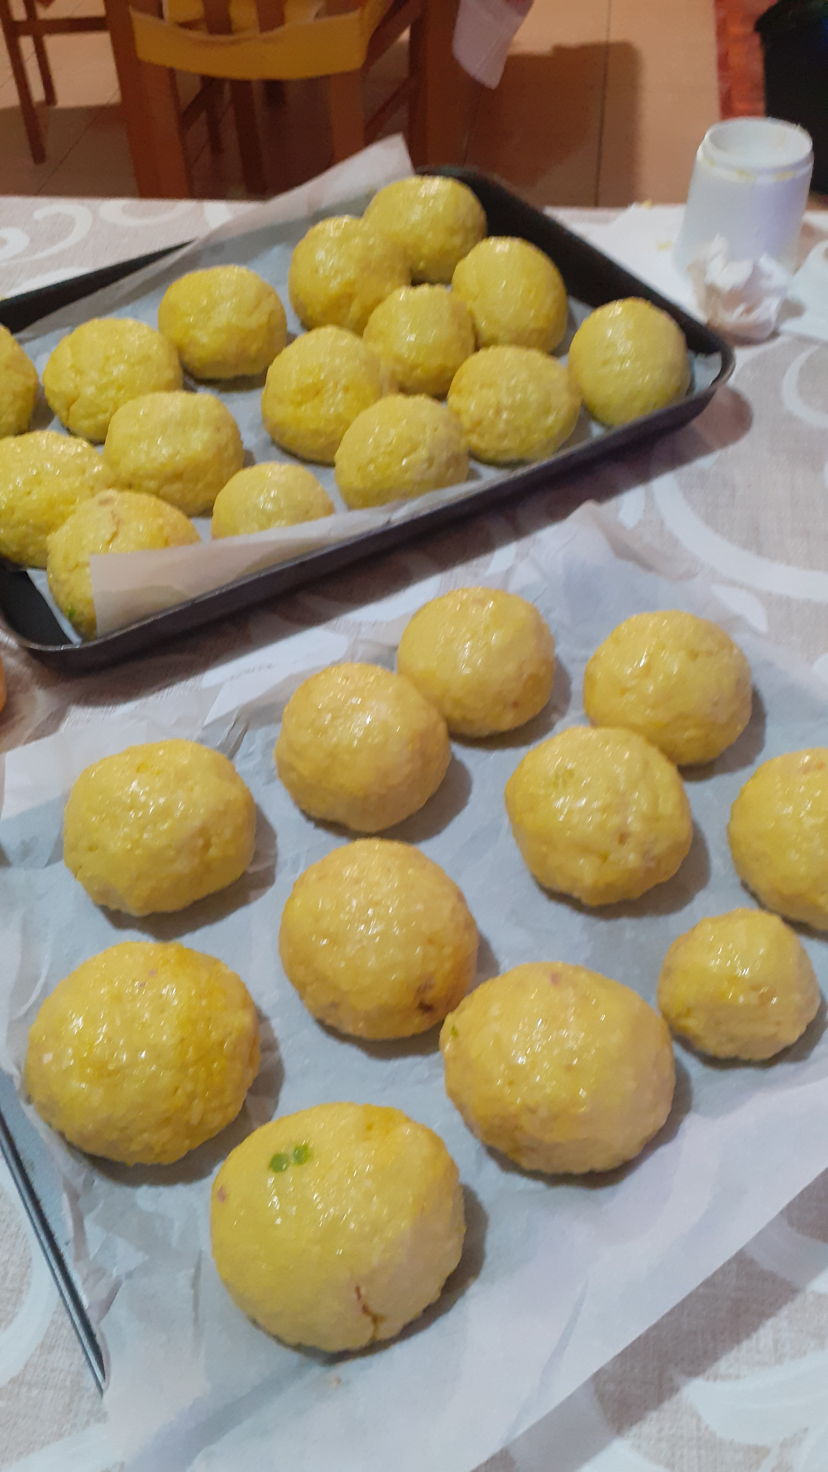 Corsi di cucina Enna: Corso di cucina sugli arancini